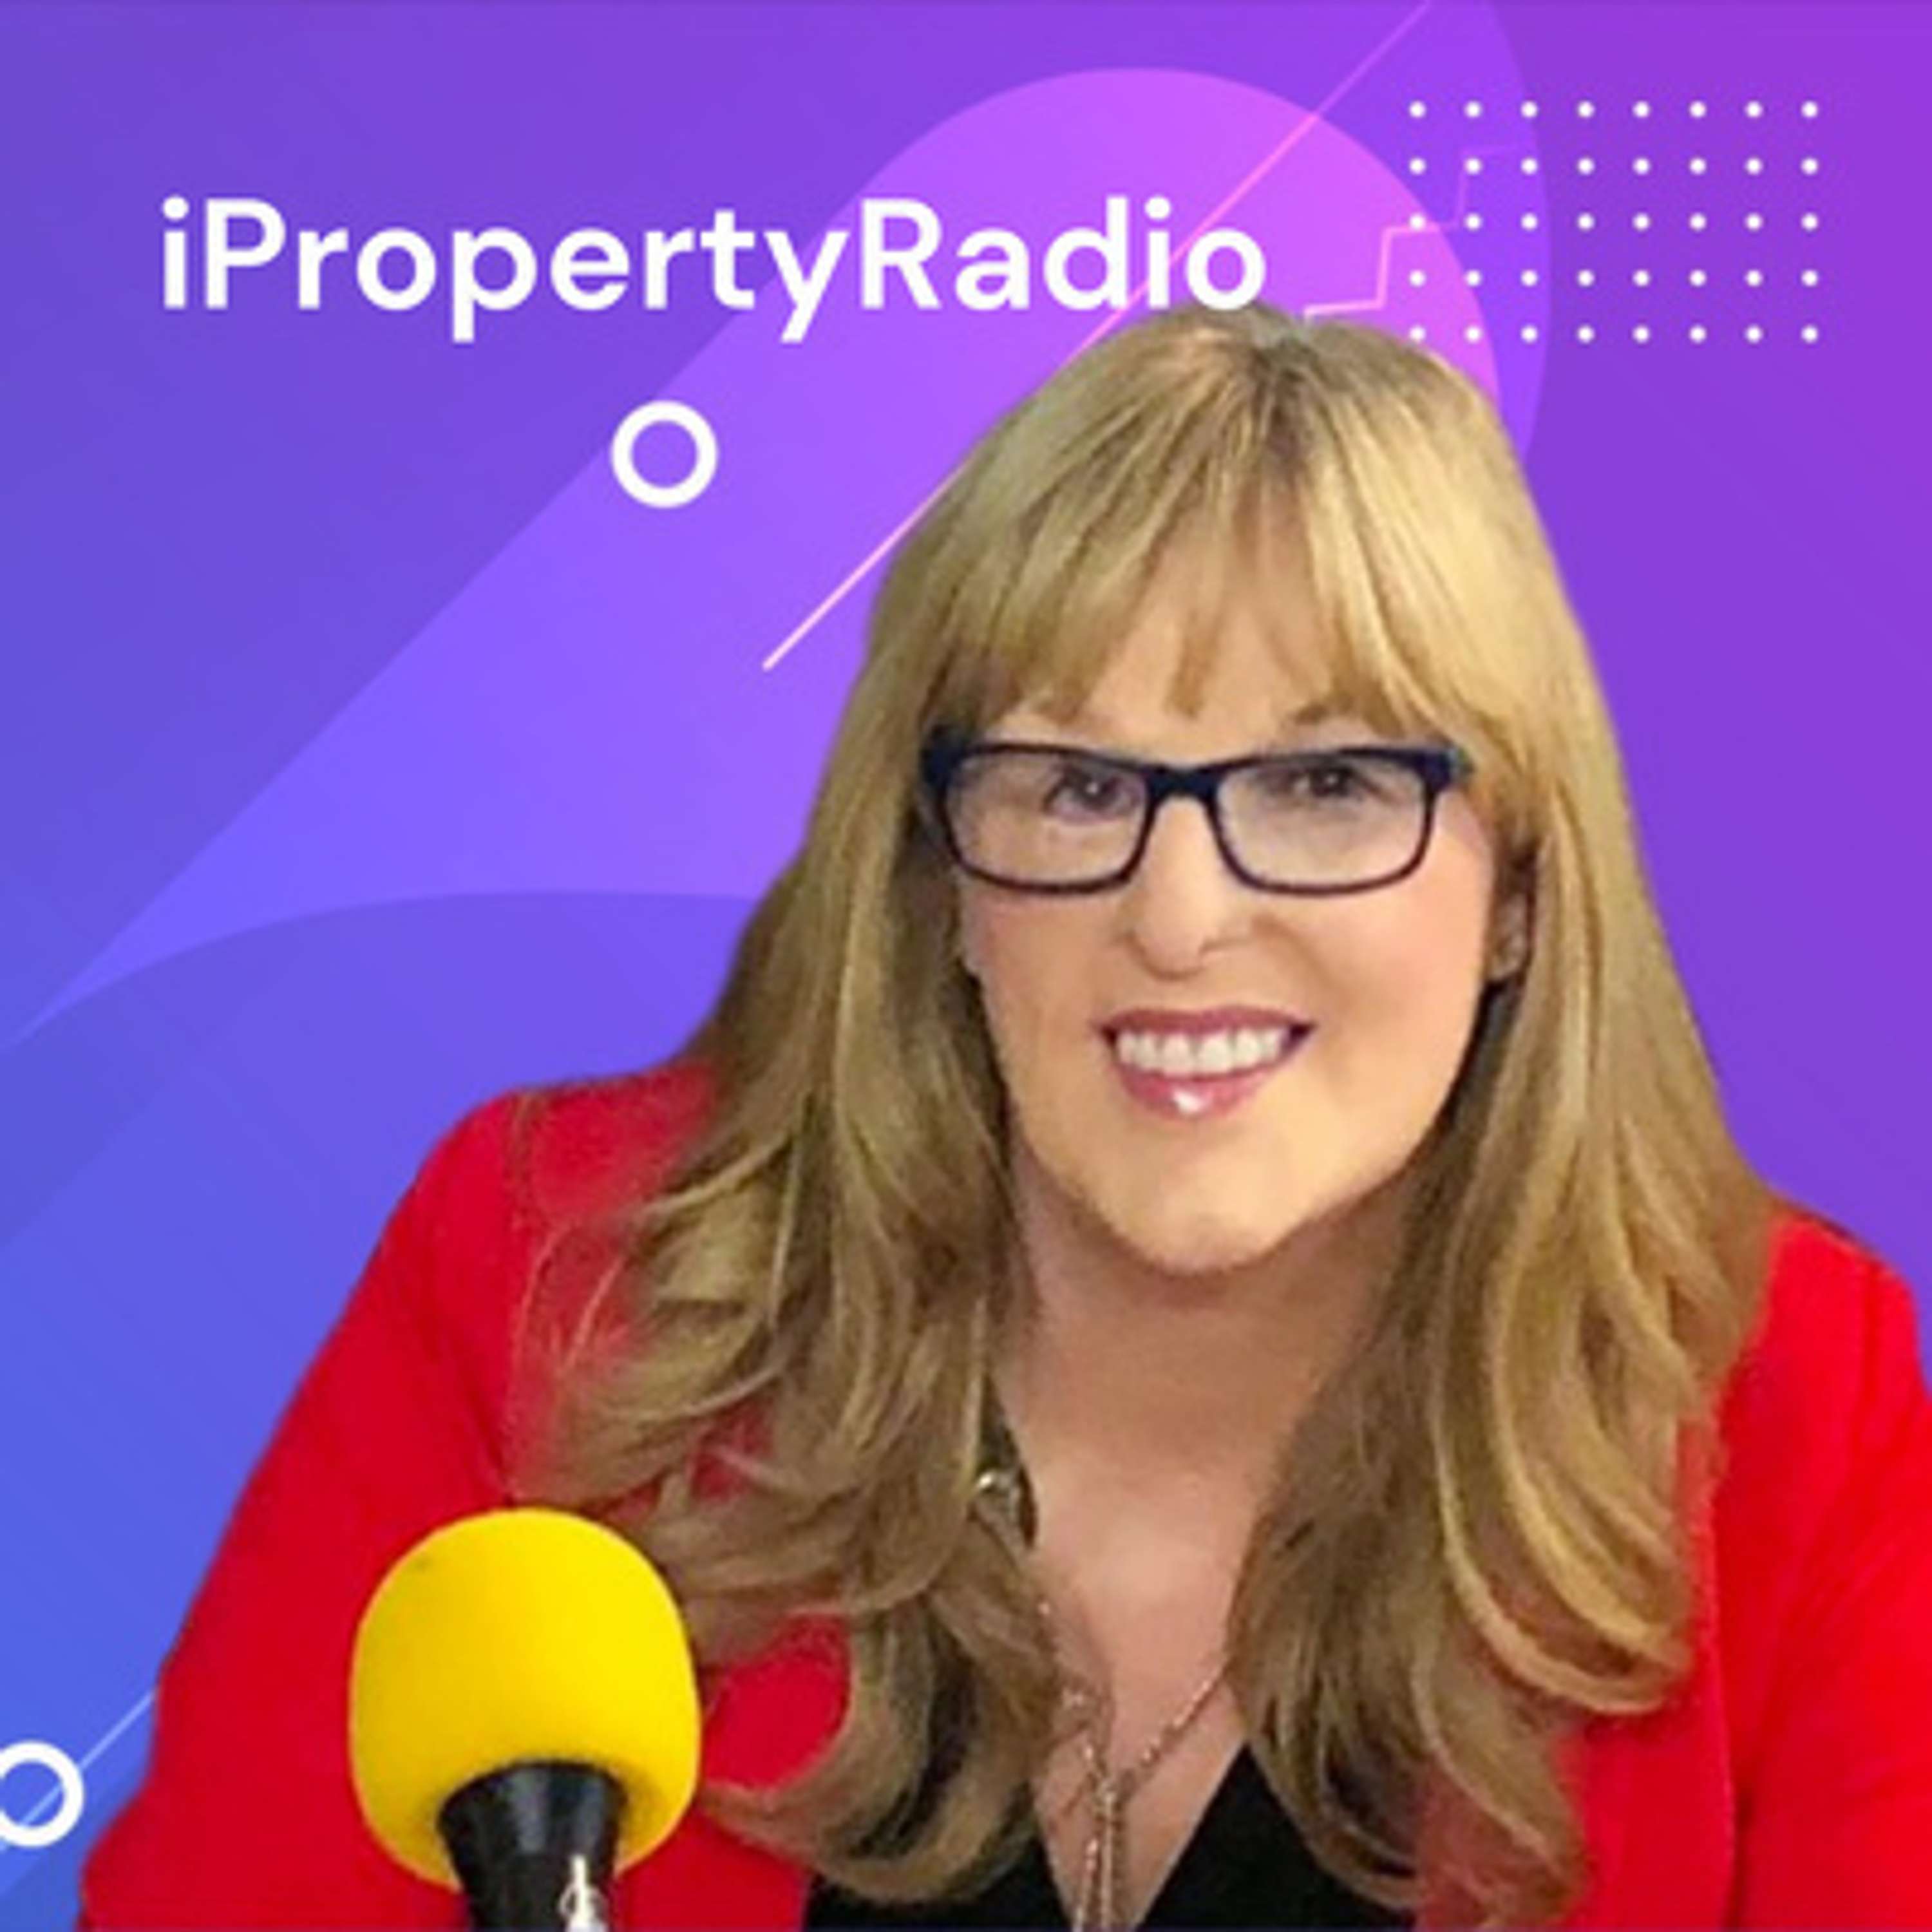 Ep.25 iPropertyRadio: Property Matters, July 15th, 2019